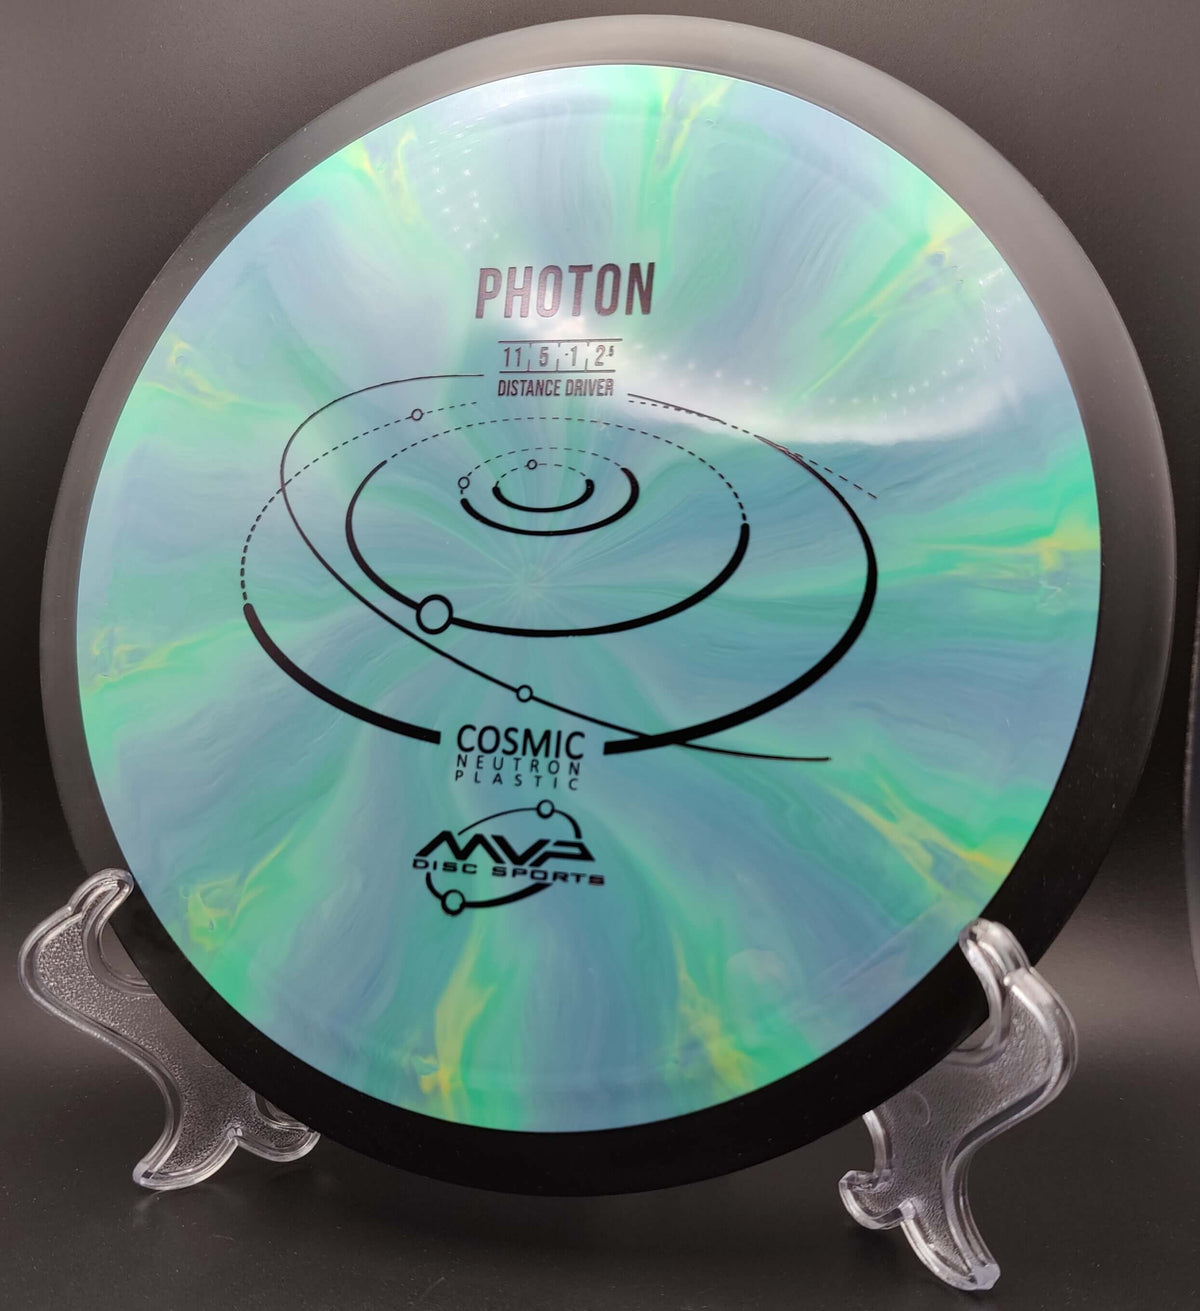 MVP Photon - Cosmic Neutron